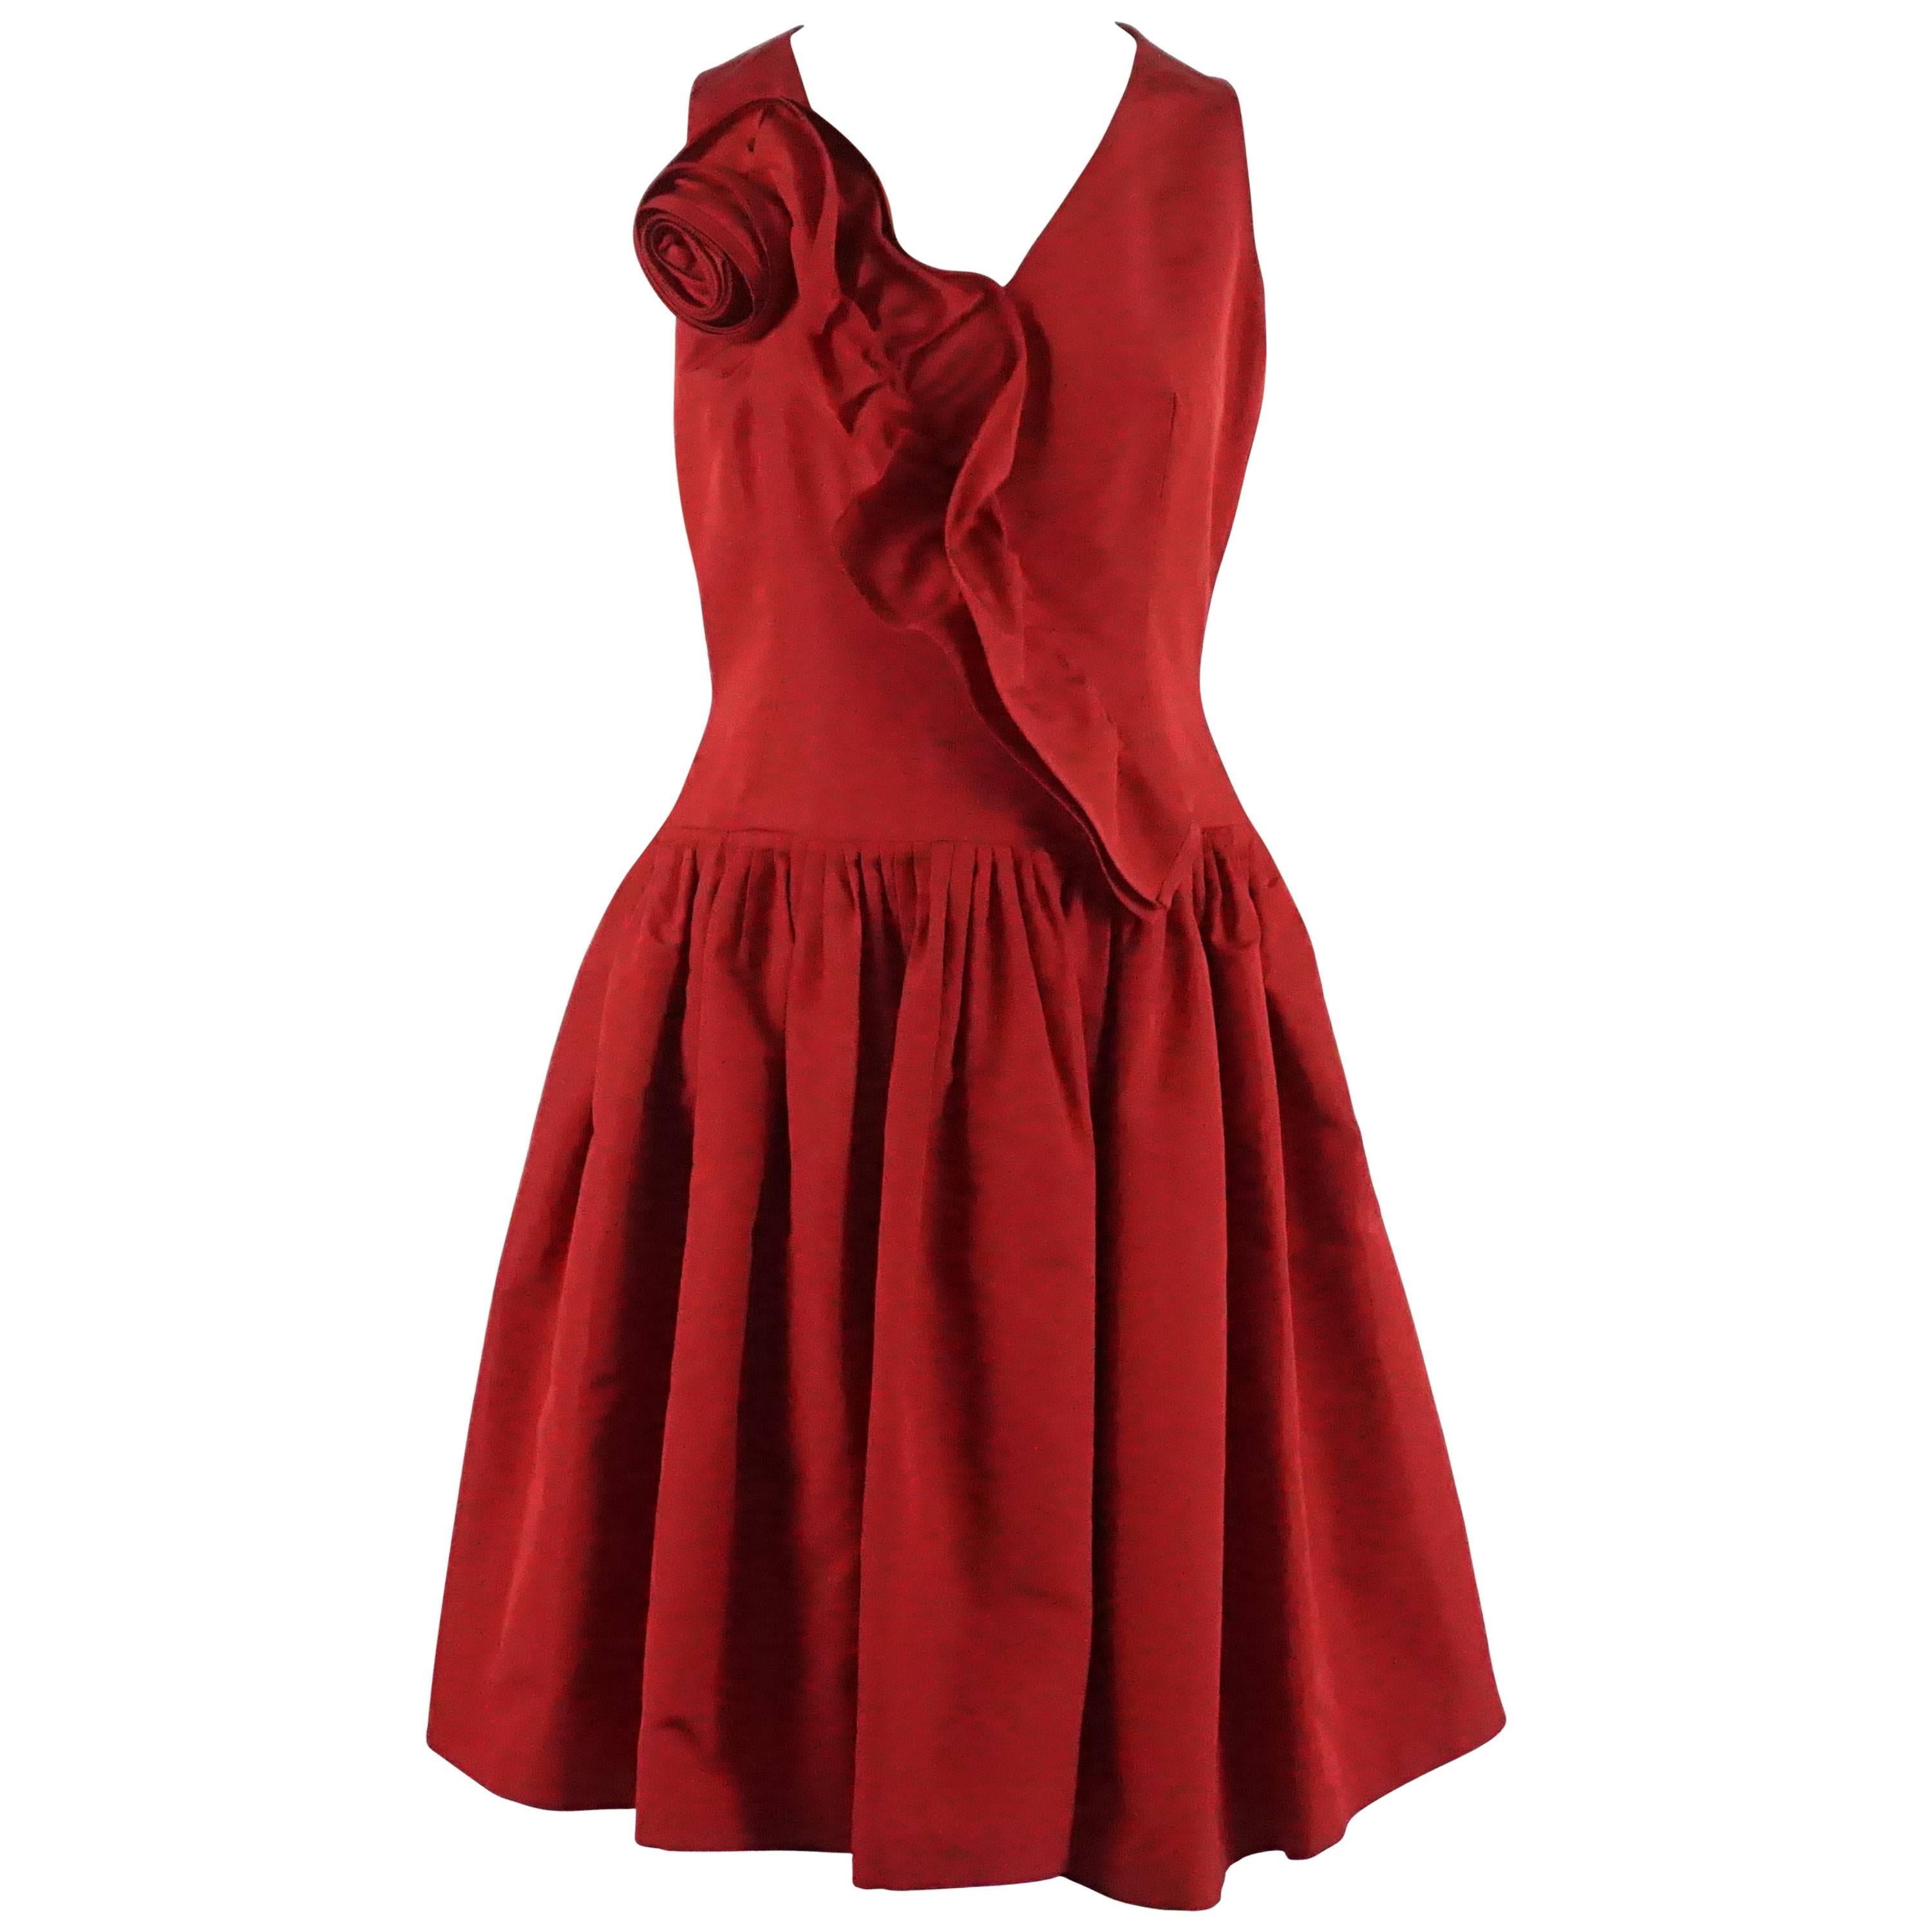 Oscar de la Renta Red Silk Taffeta Dress with Rose Detail - 6 For Sale